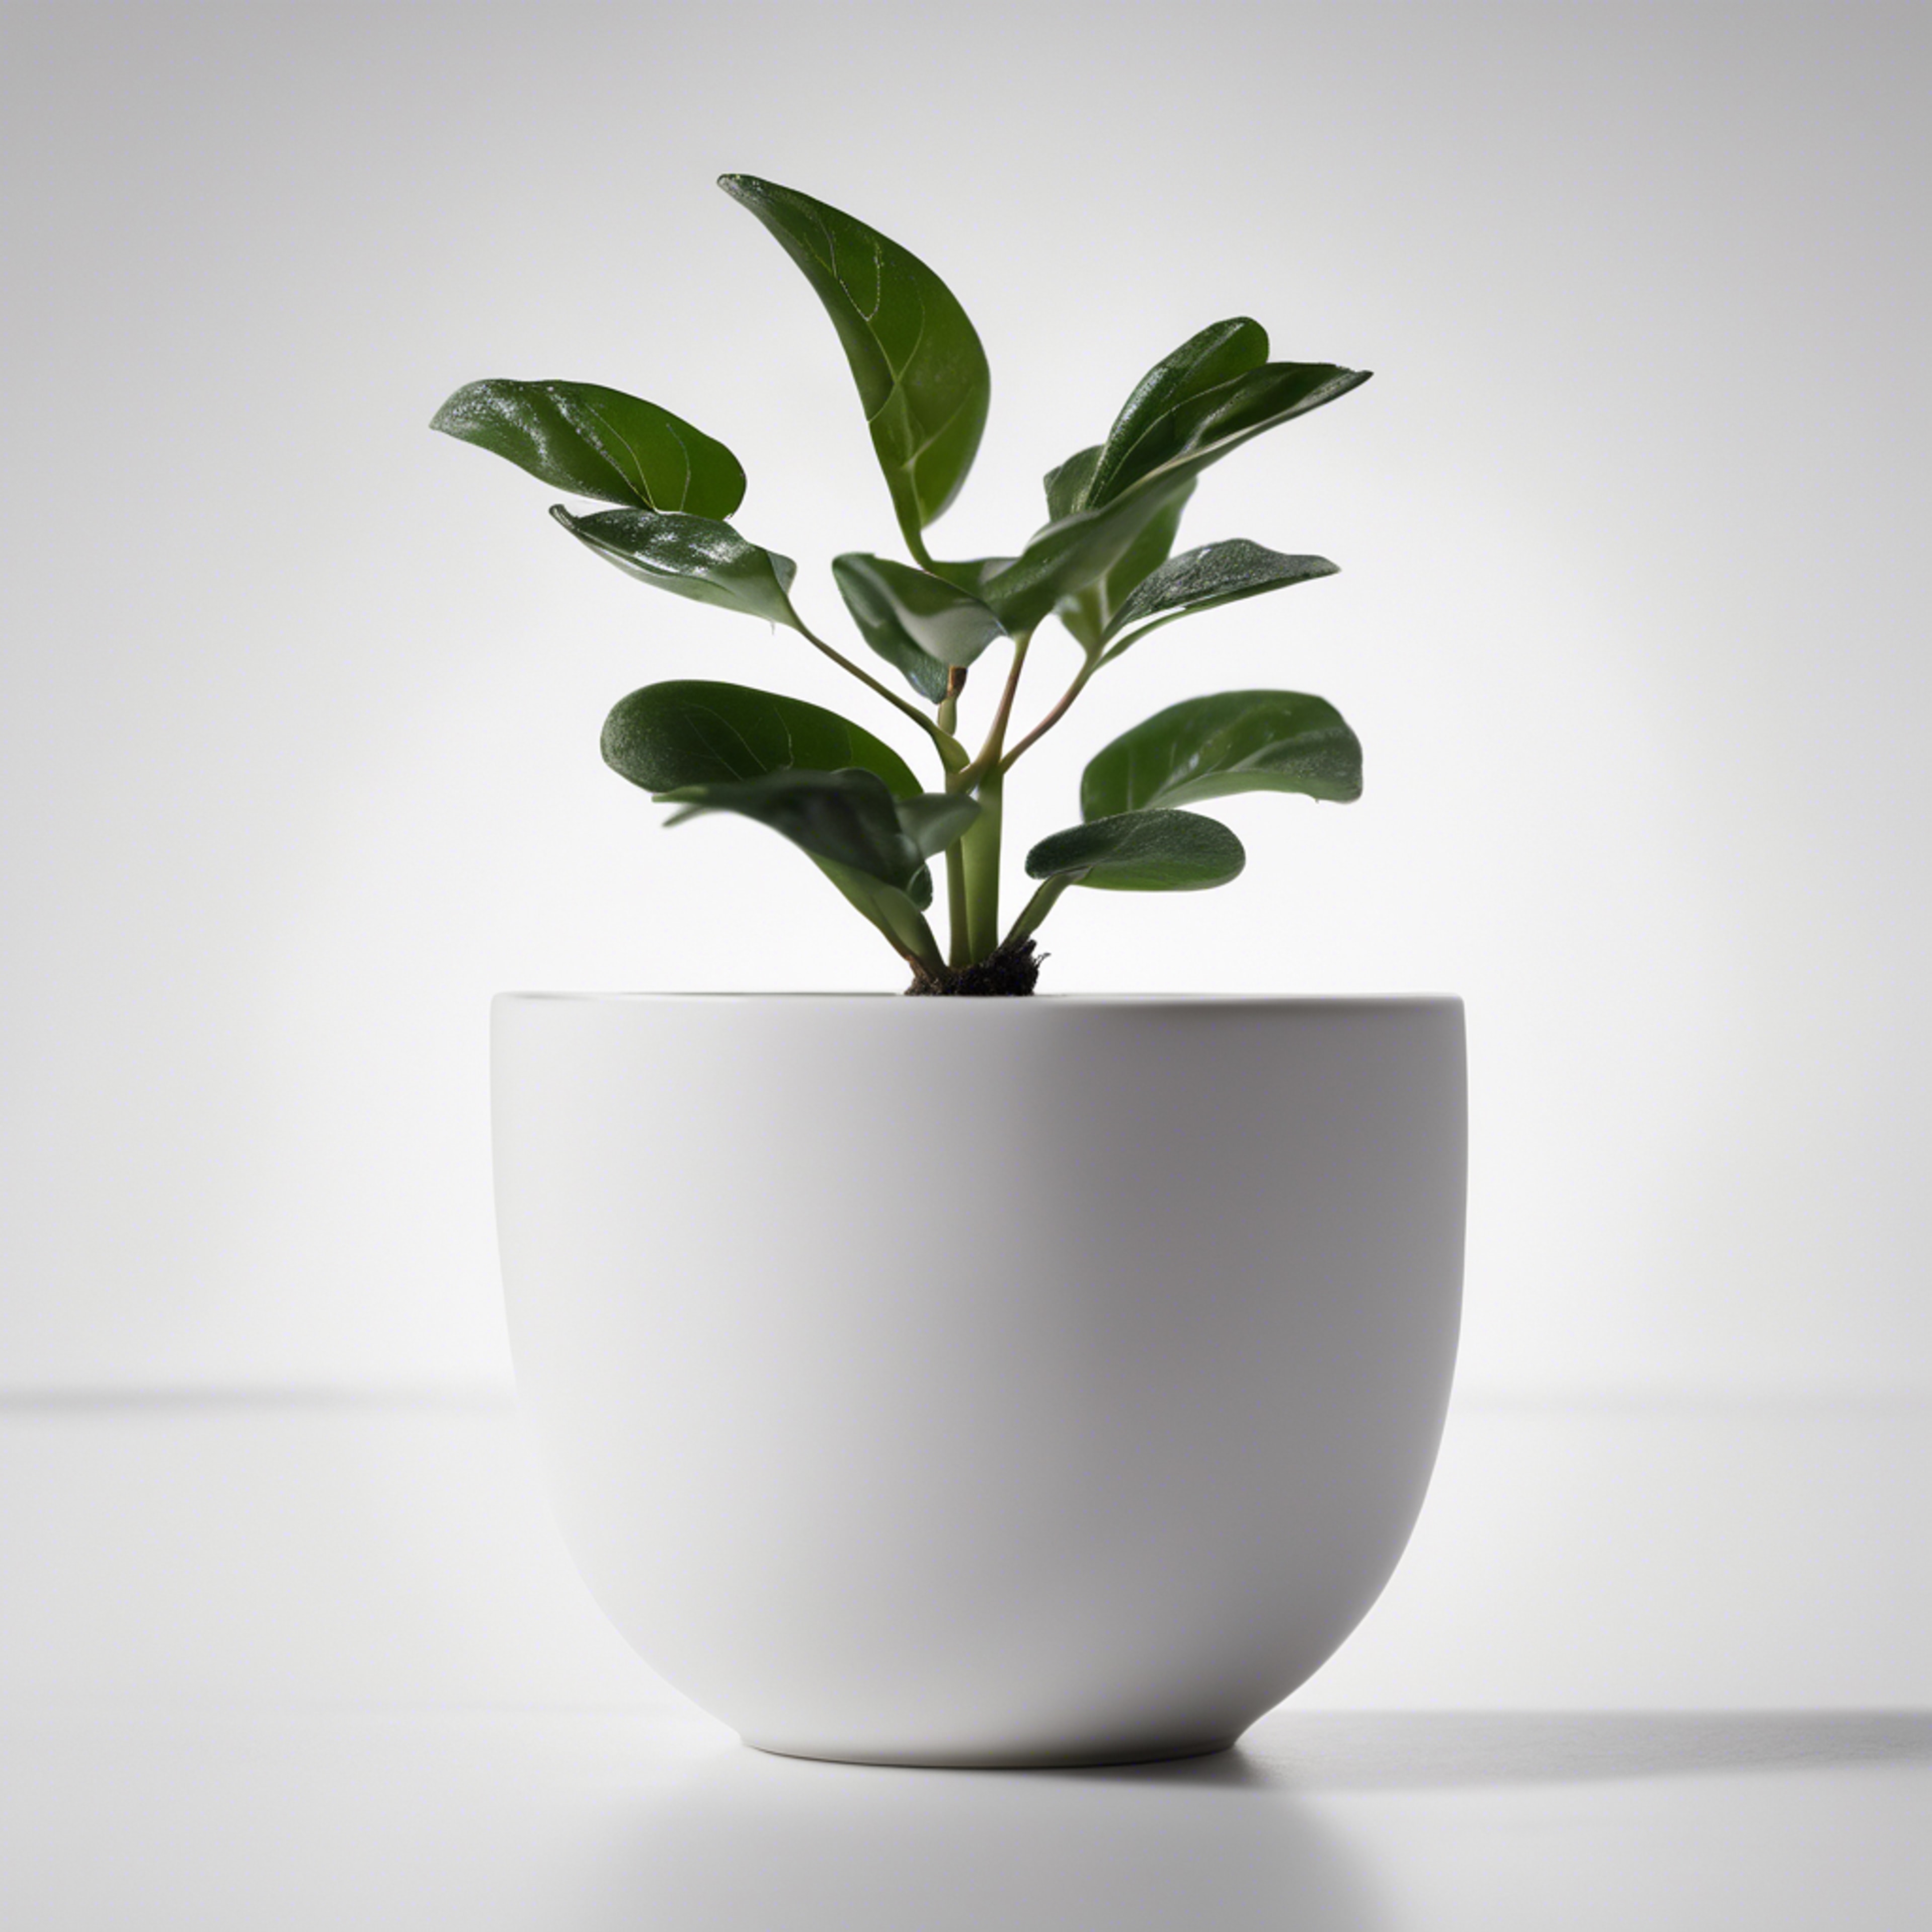 Small plant in a simple white ceramic pot against a minimalist white backdrop. ផ្ទាំង​រូបភាព[a9b2ed4c340742d2b1fd]